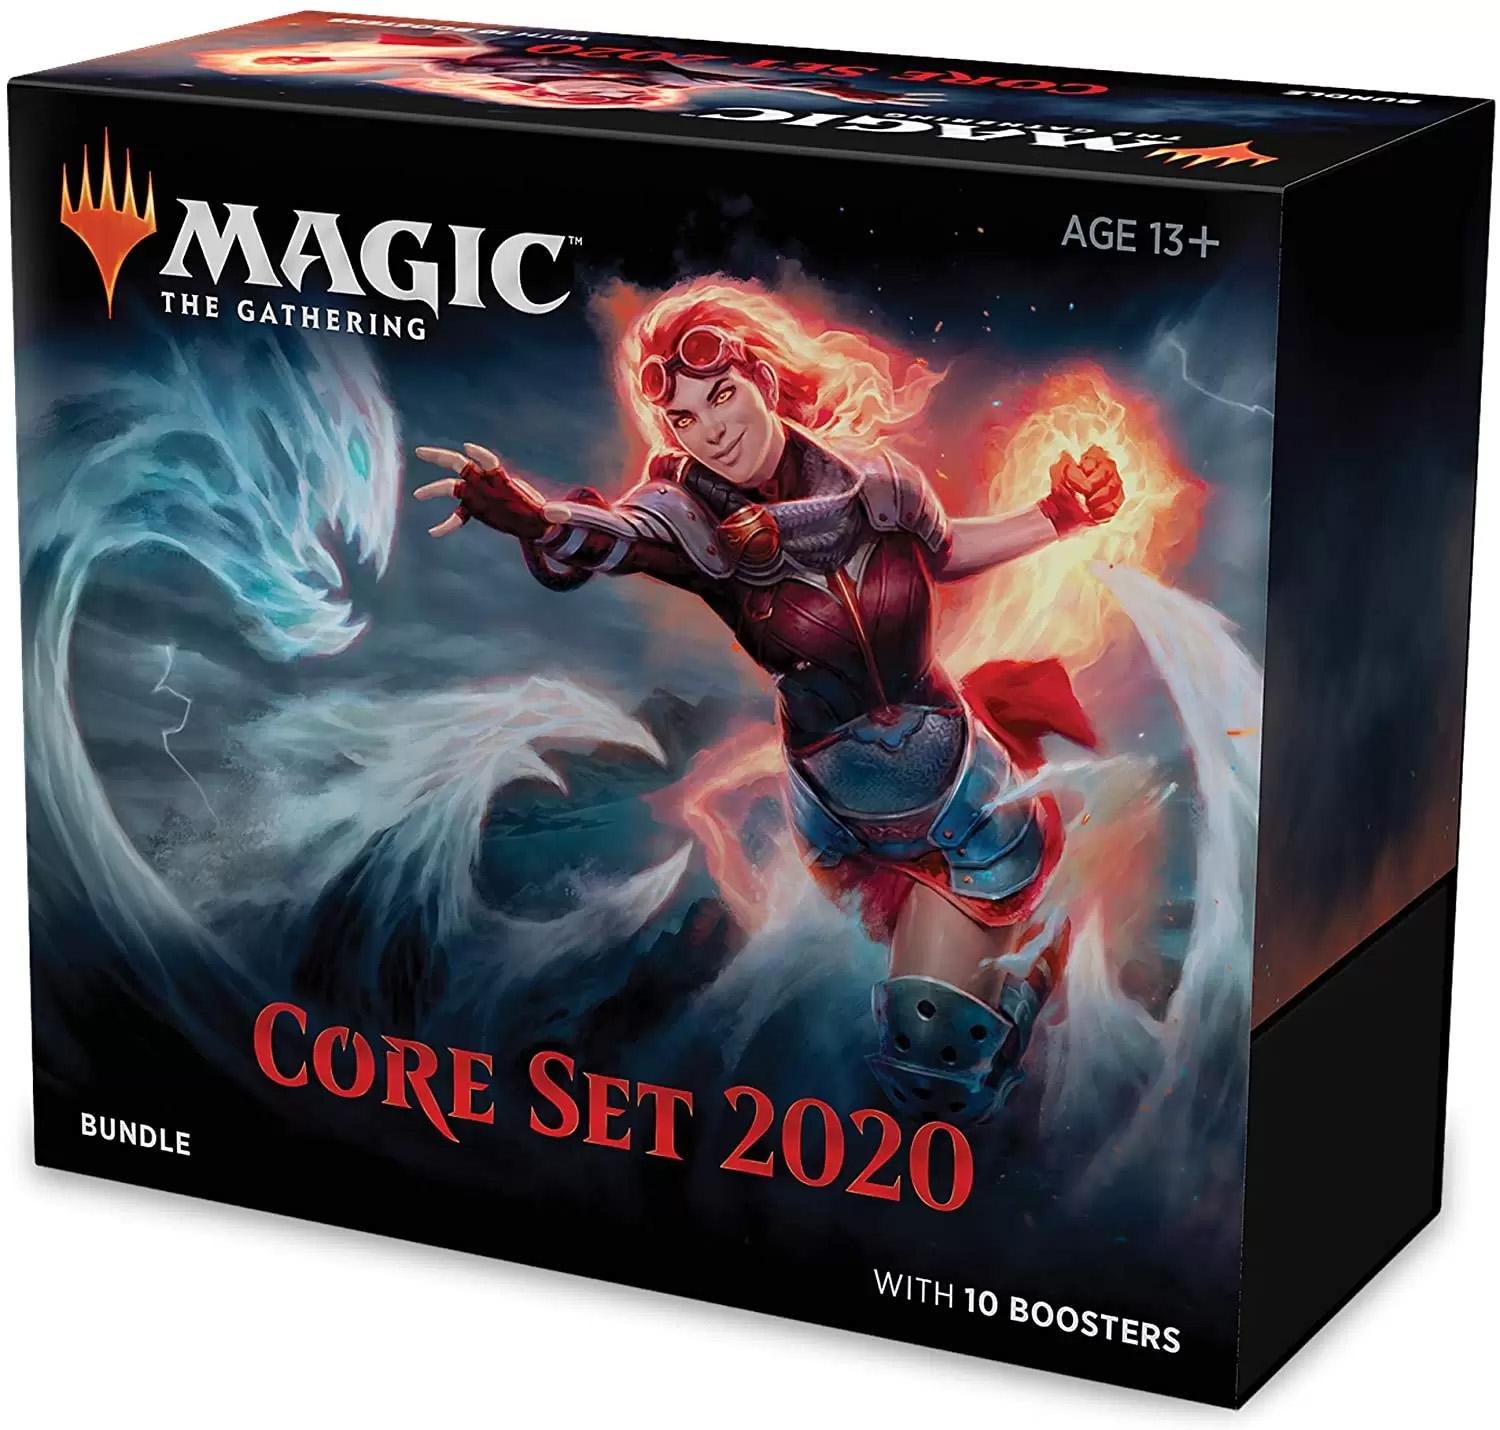 2 Magic The Gathering 2020 Core Set Bundle for $44.95 Shipped